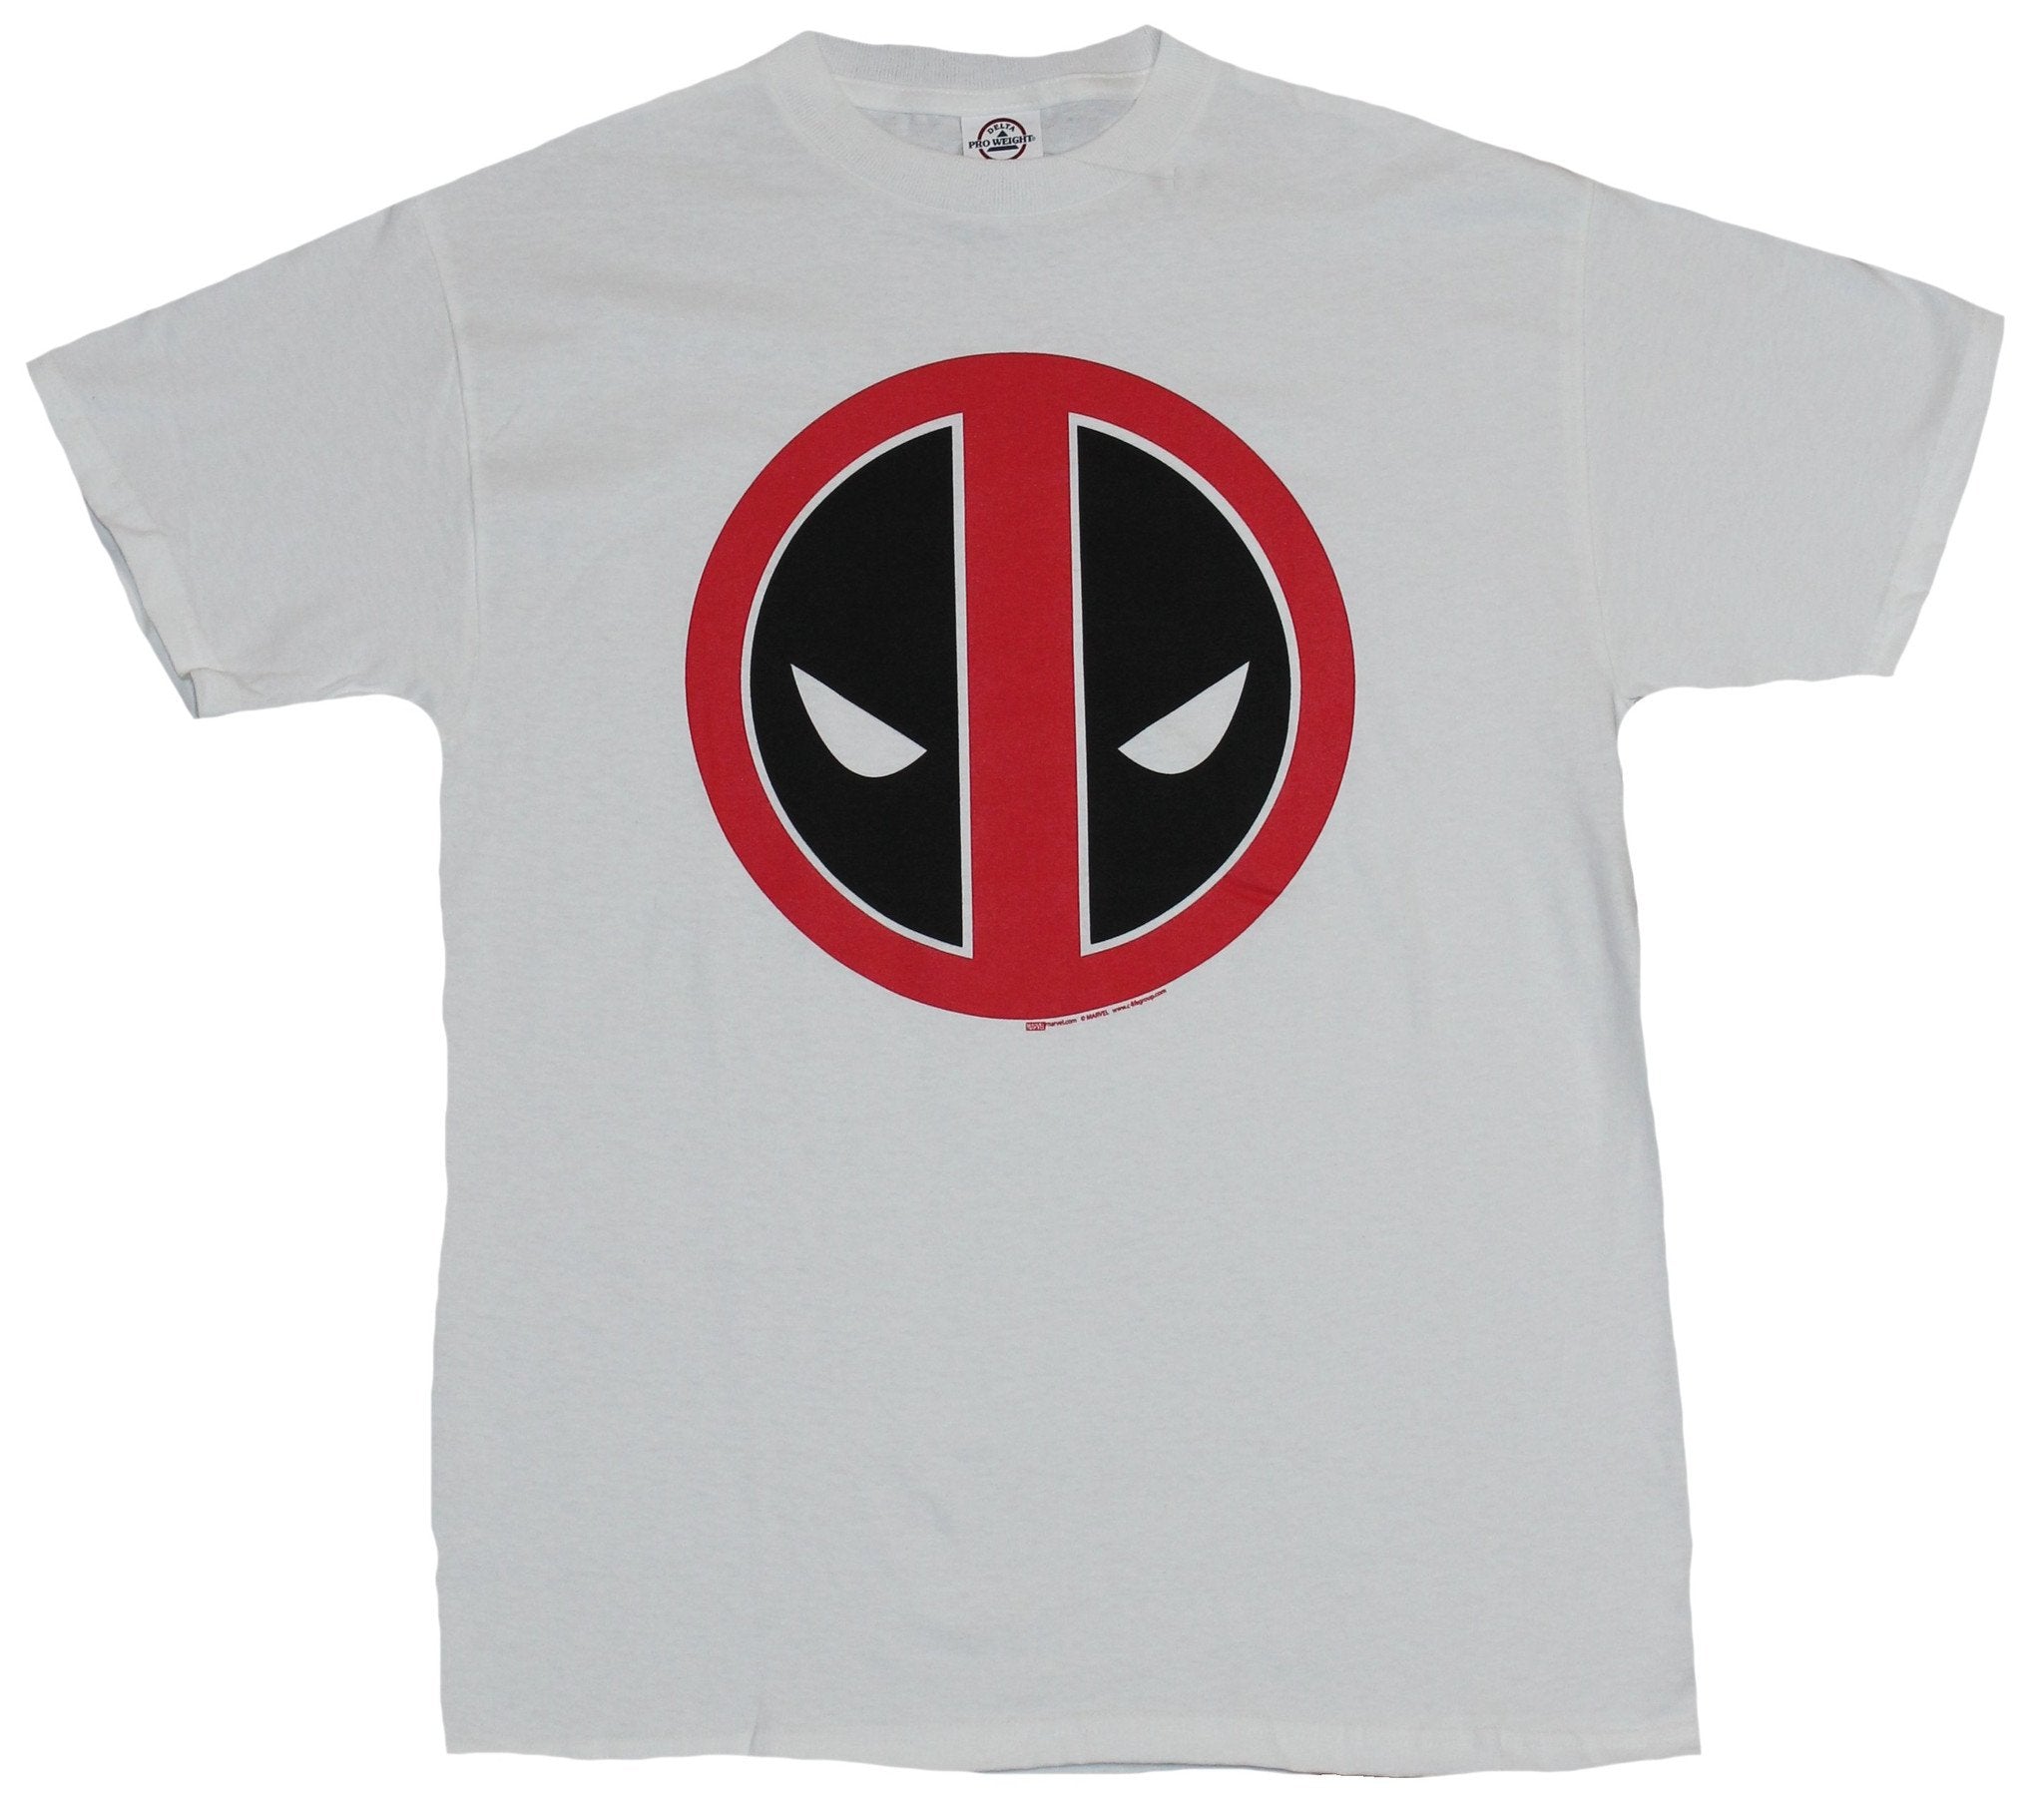 Deadpool (Marvel Comics) Mens T-Shirt - Simple Circle Logo Red Black White